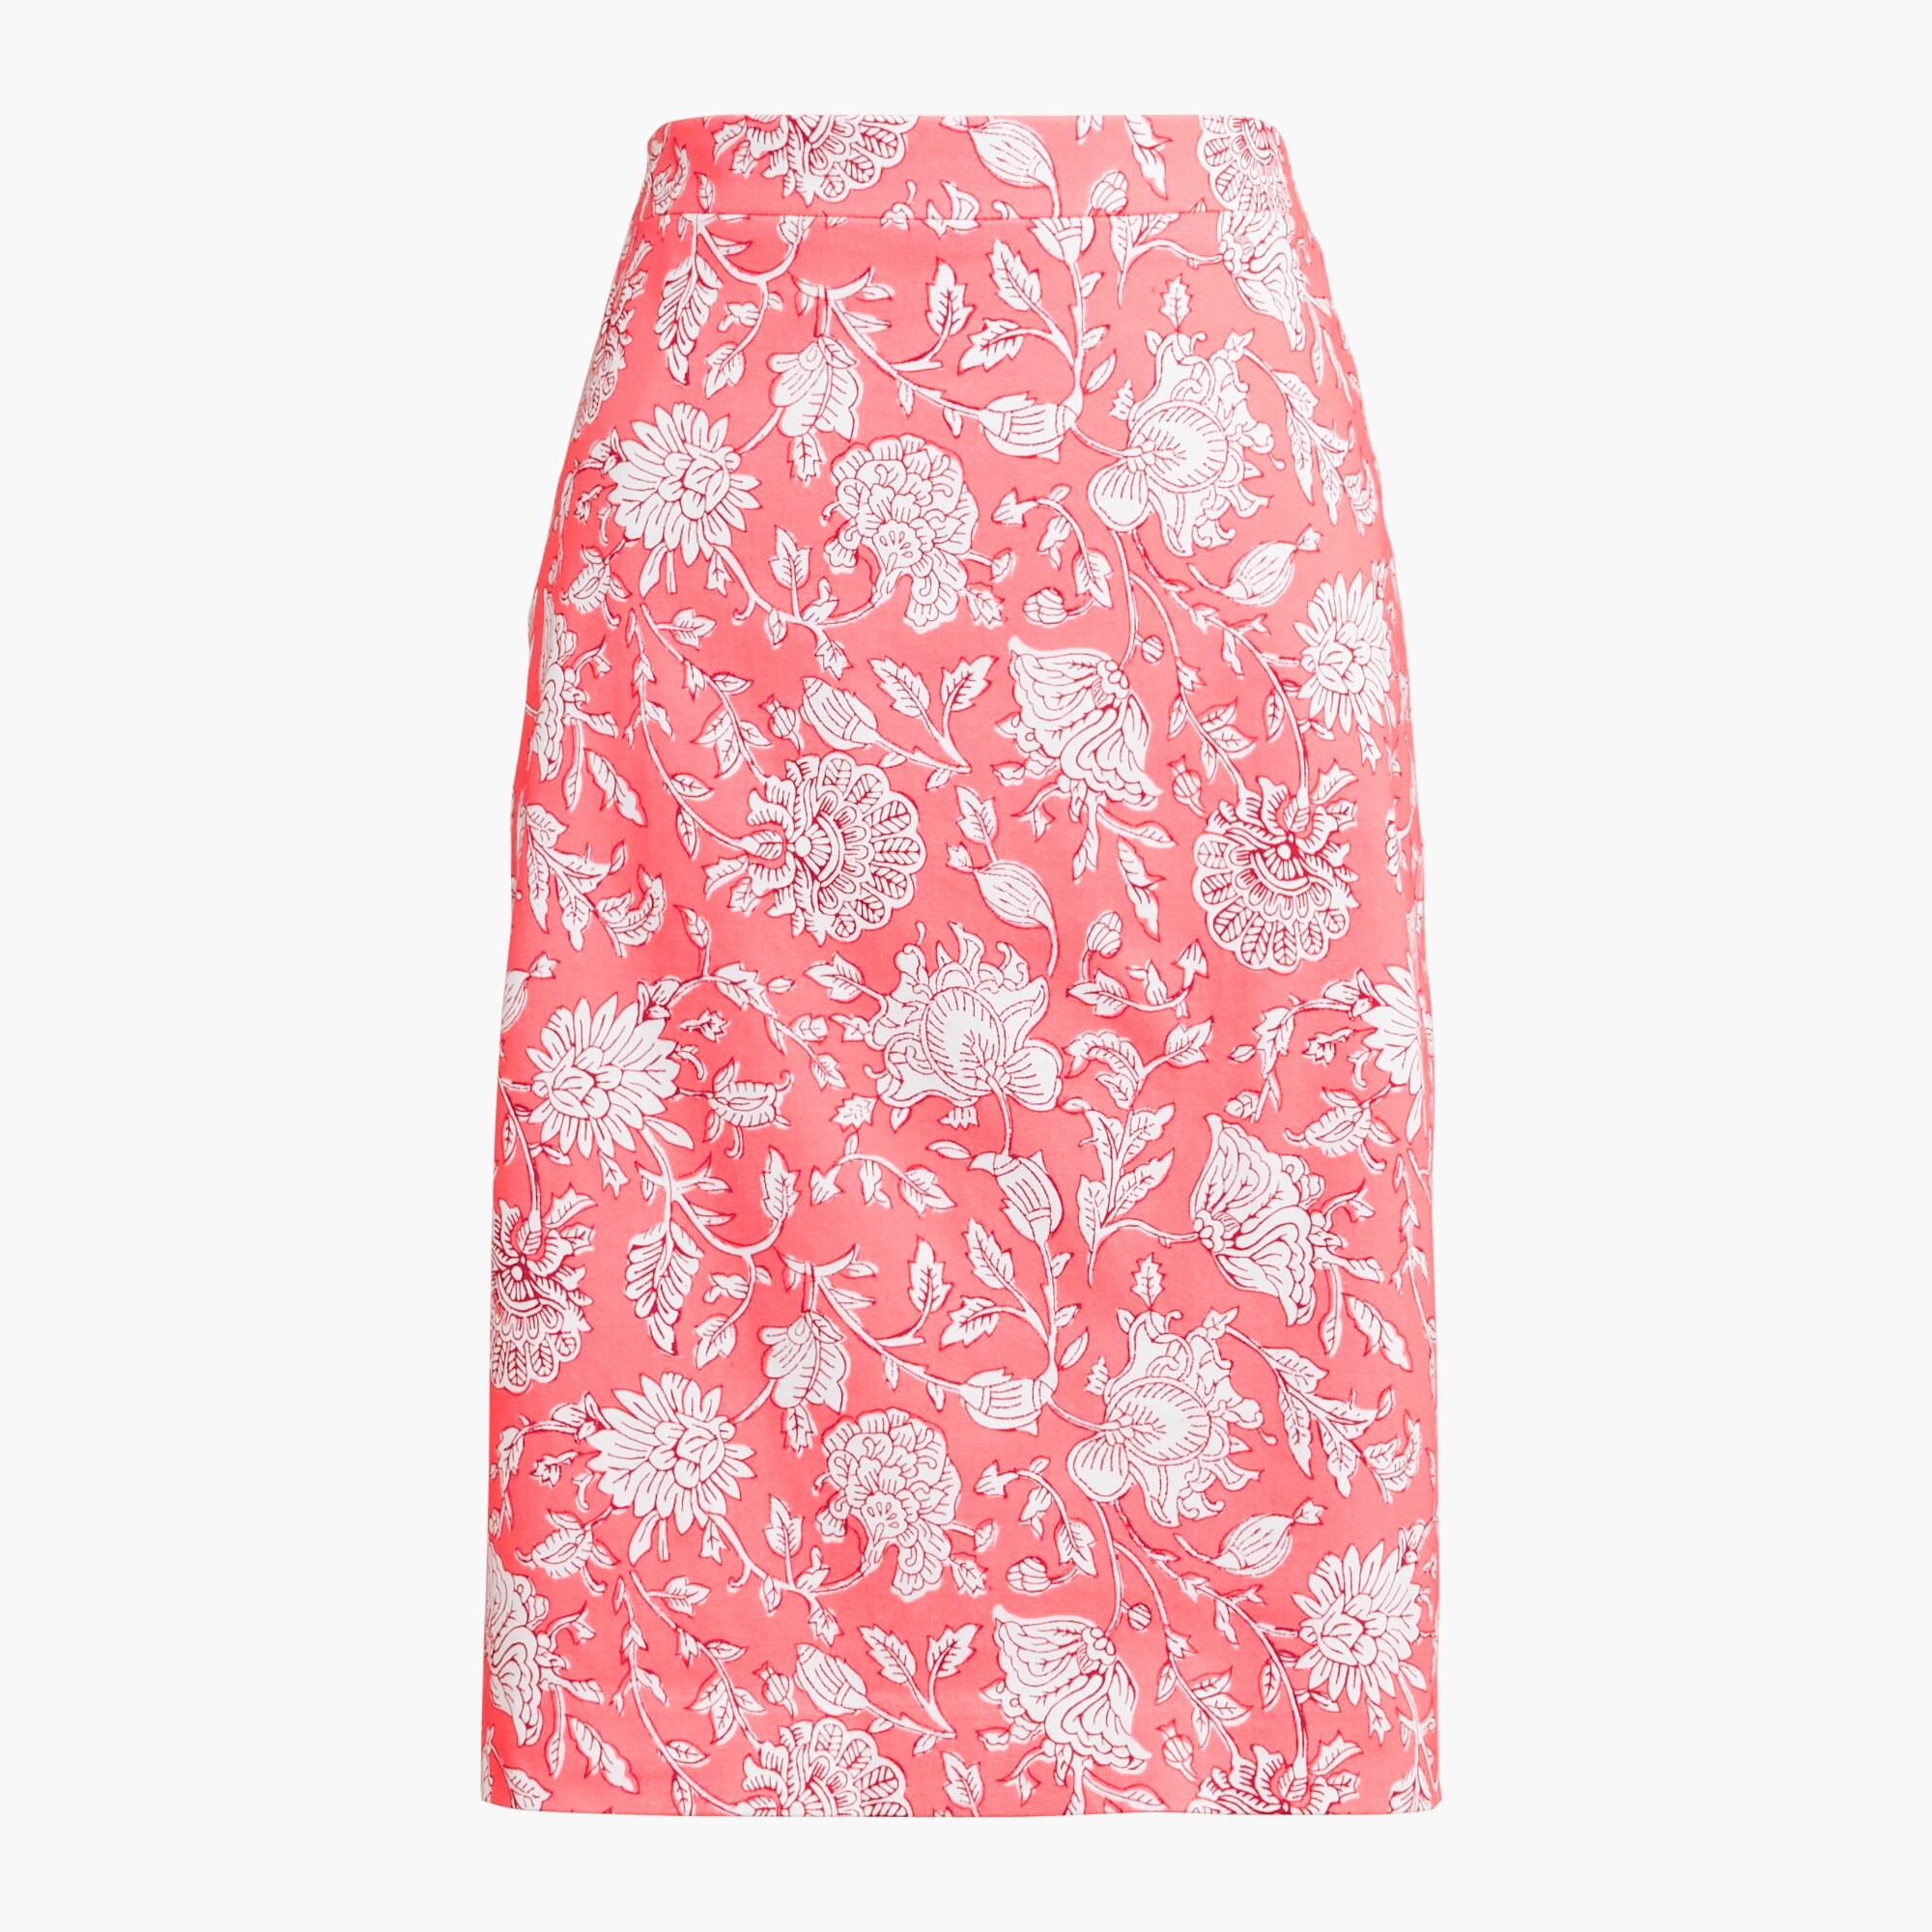  Printed pencil skirt